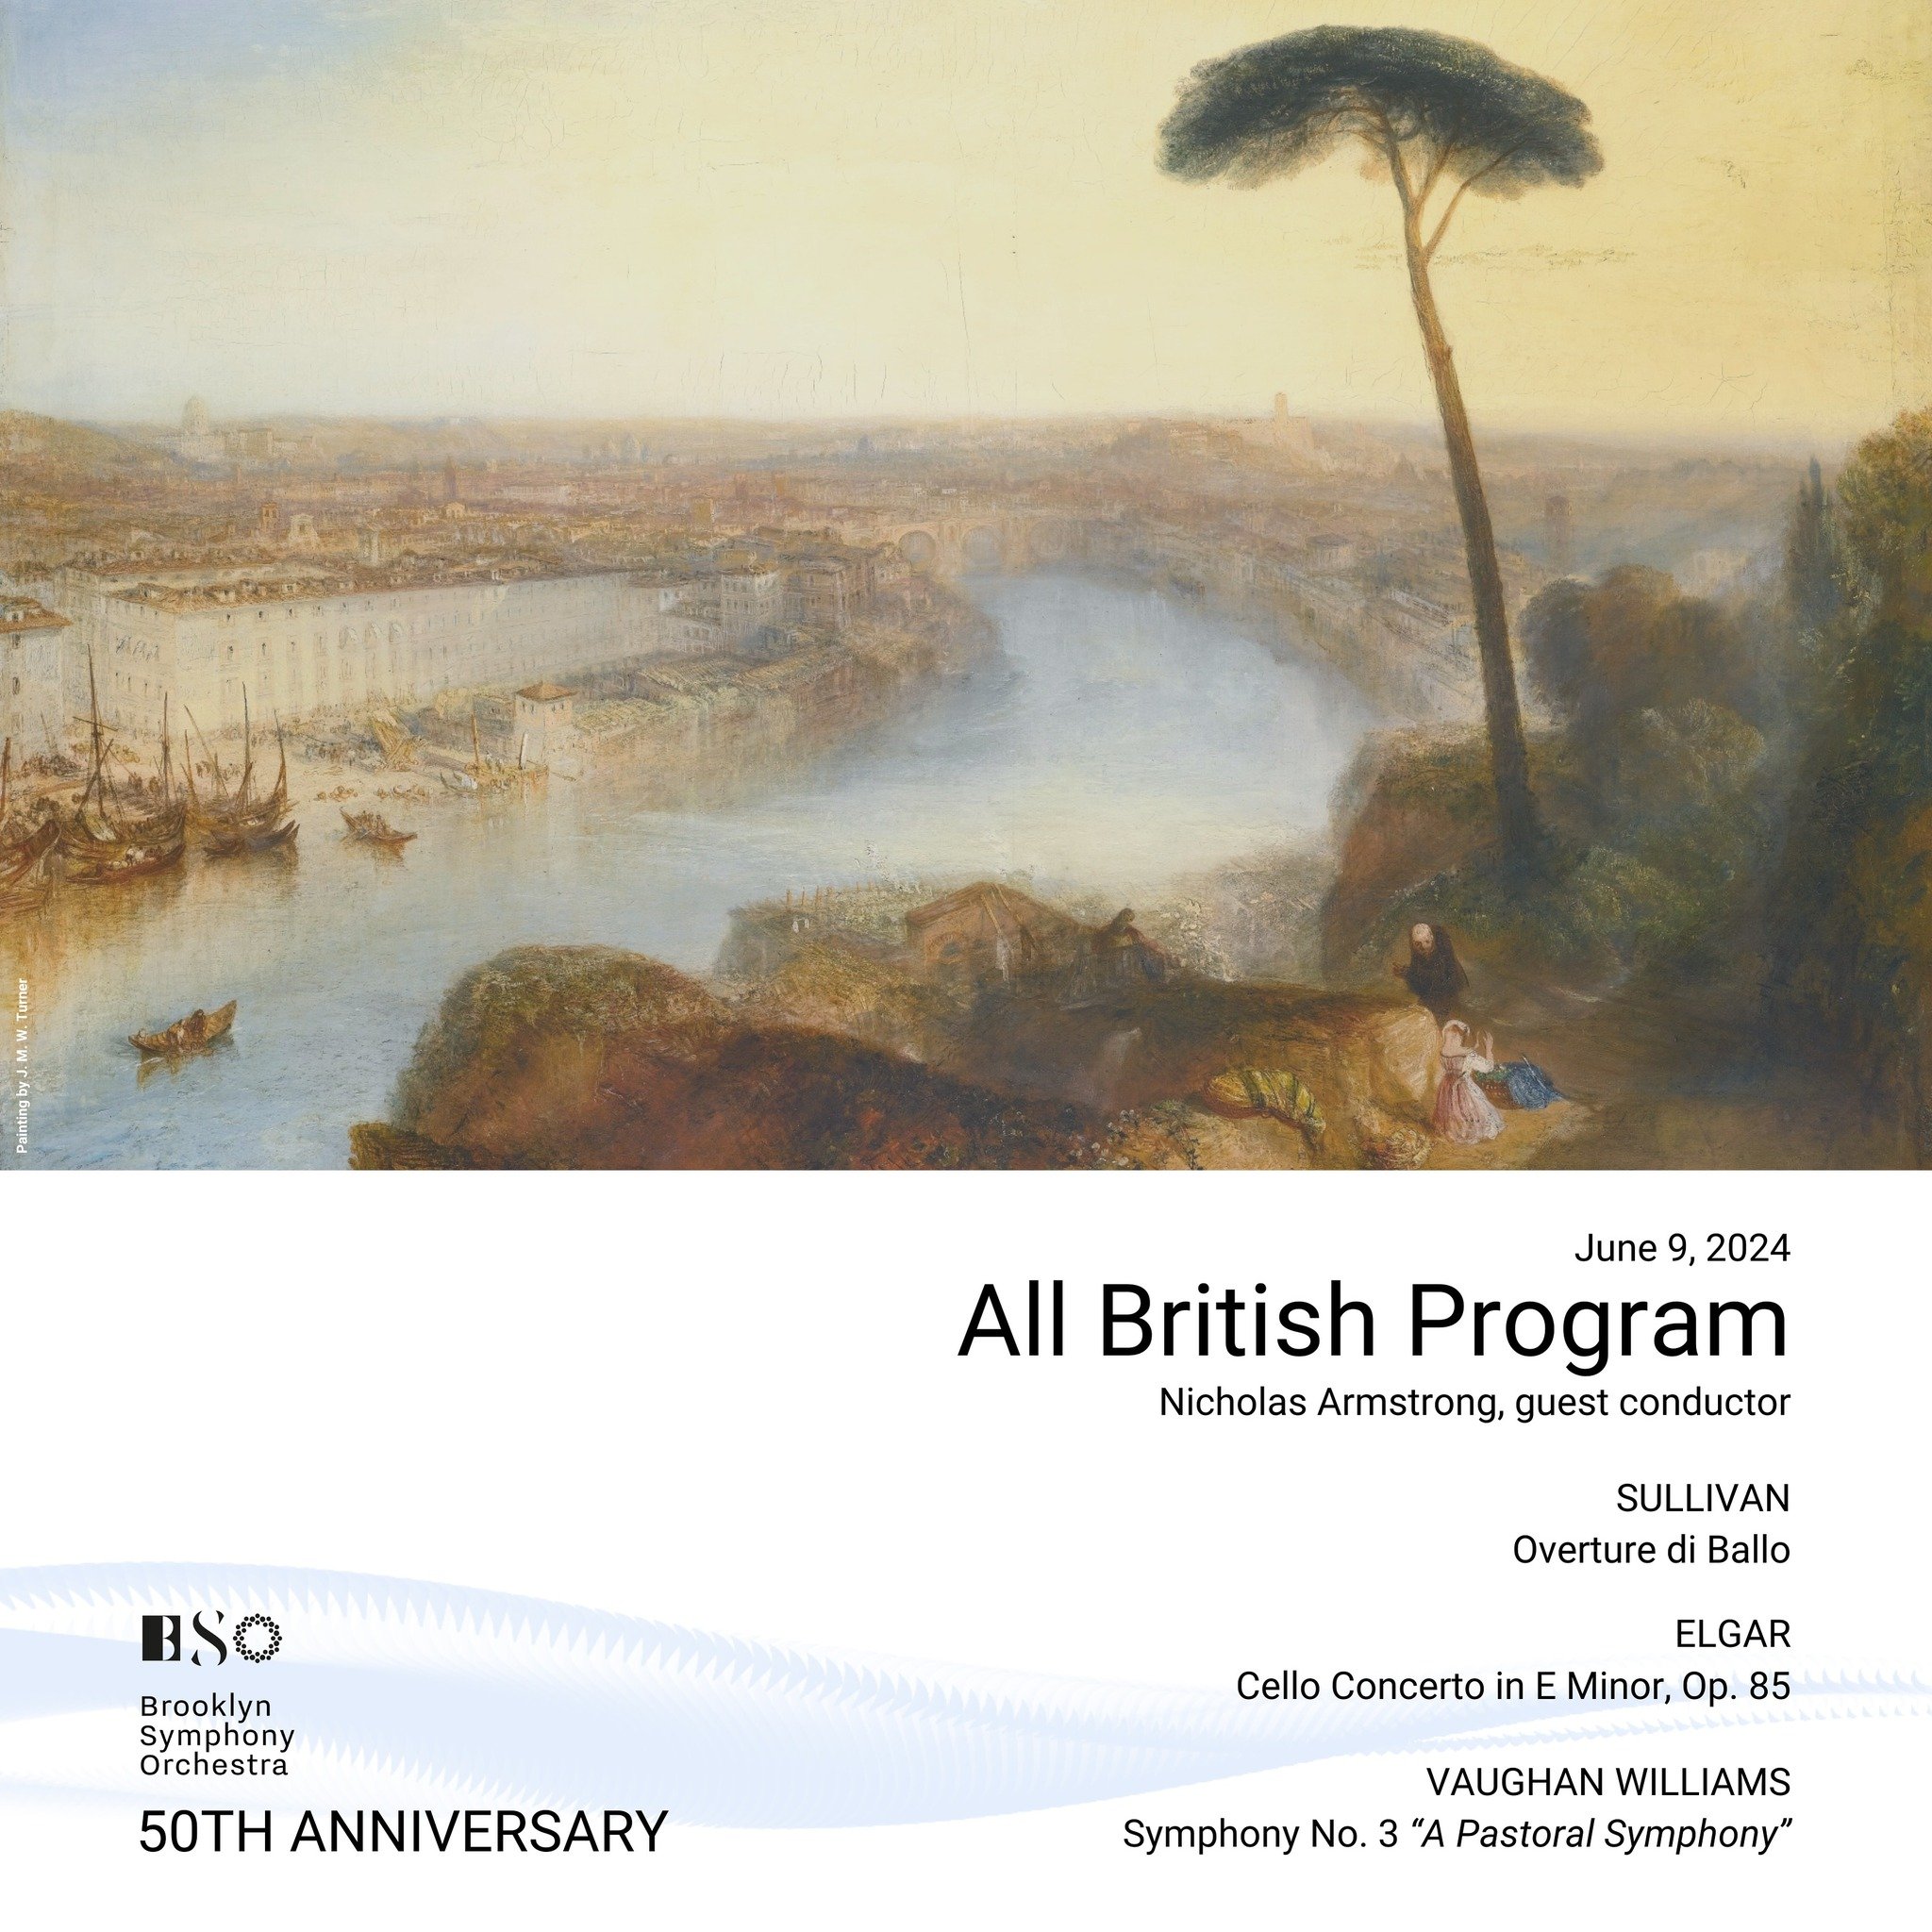 All British Program 🇬🇧🎶⠀
⠀
SULLIVAN⠀
Overture di Ballo⠀
⠀
ELGAR⠀
Cello Concerto in E Minor, Op. 85⠀
⠀
VAUGHAN WILLIAMS⠀
Symphony No. 3, &ldquo;A Pastoral Symphony&rdquo;⠀
⠀
Nicholas Armstrong, guest conductor⠀
@maestronick⠀
⠀
Sunday, June 9⠀
2:00p